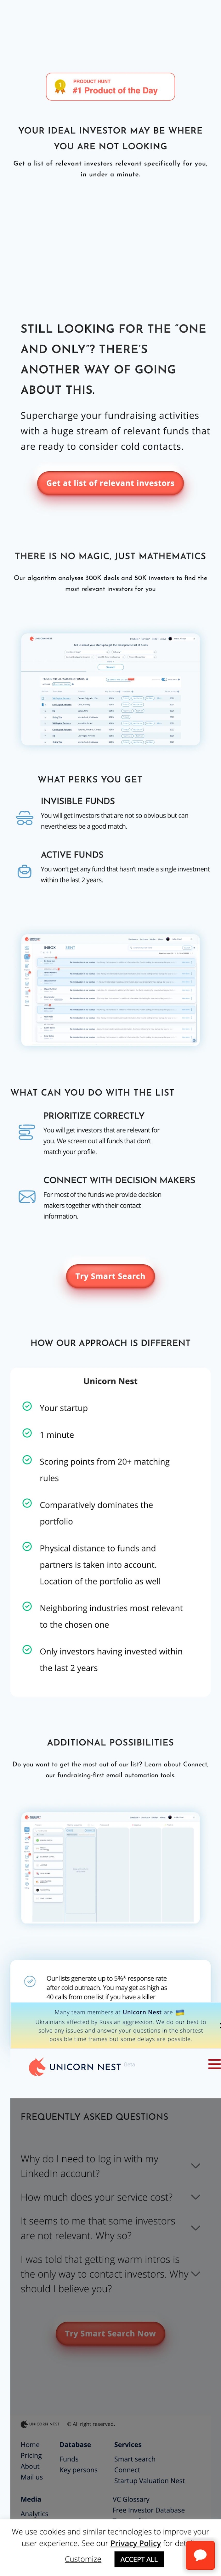 Unicorn Nest landing page design